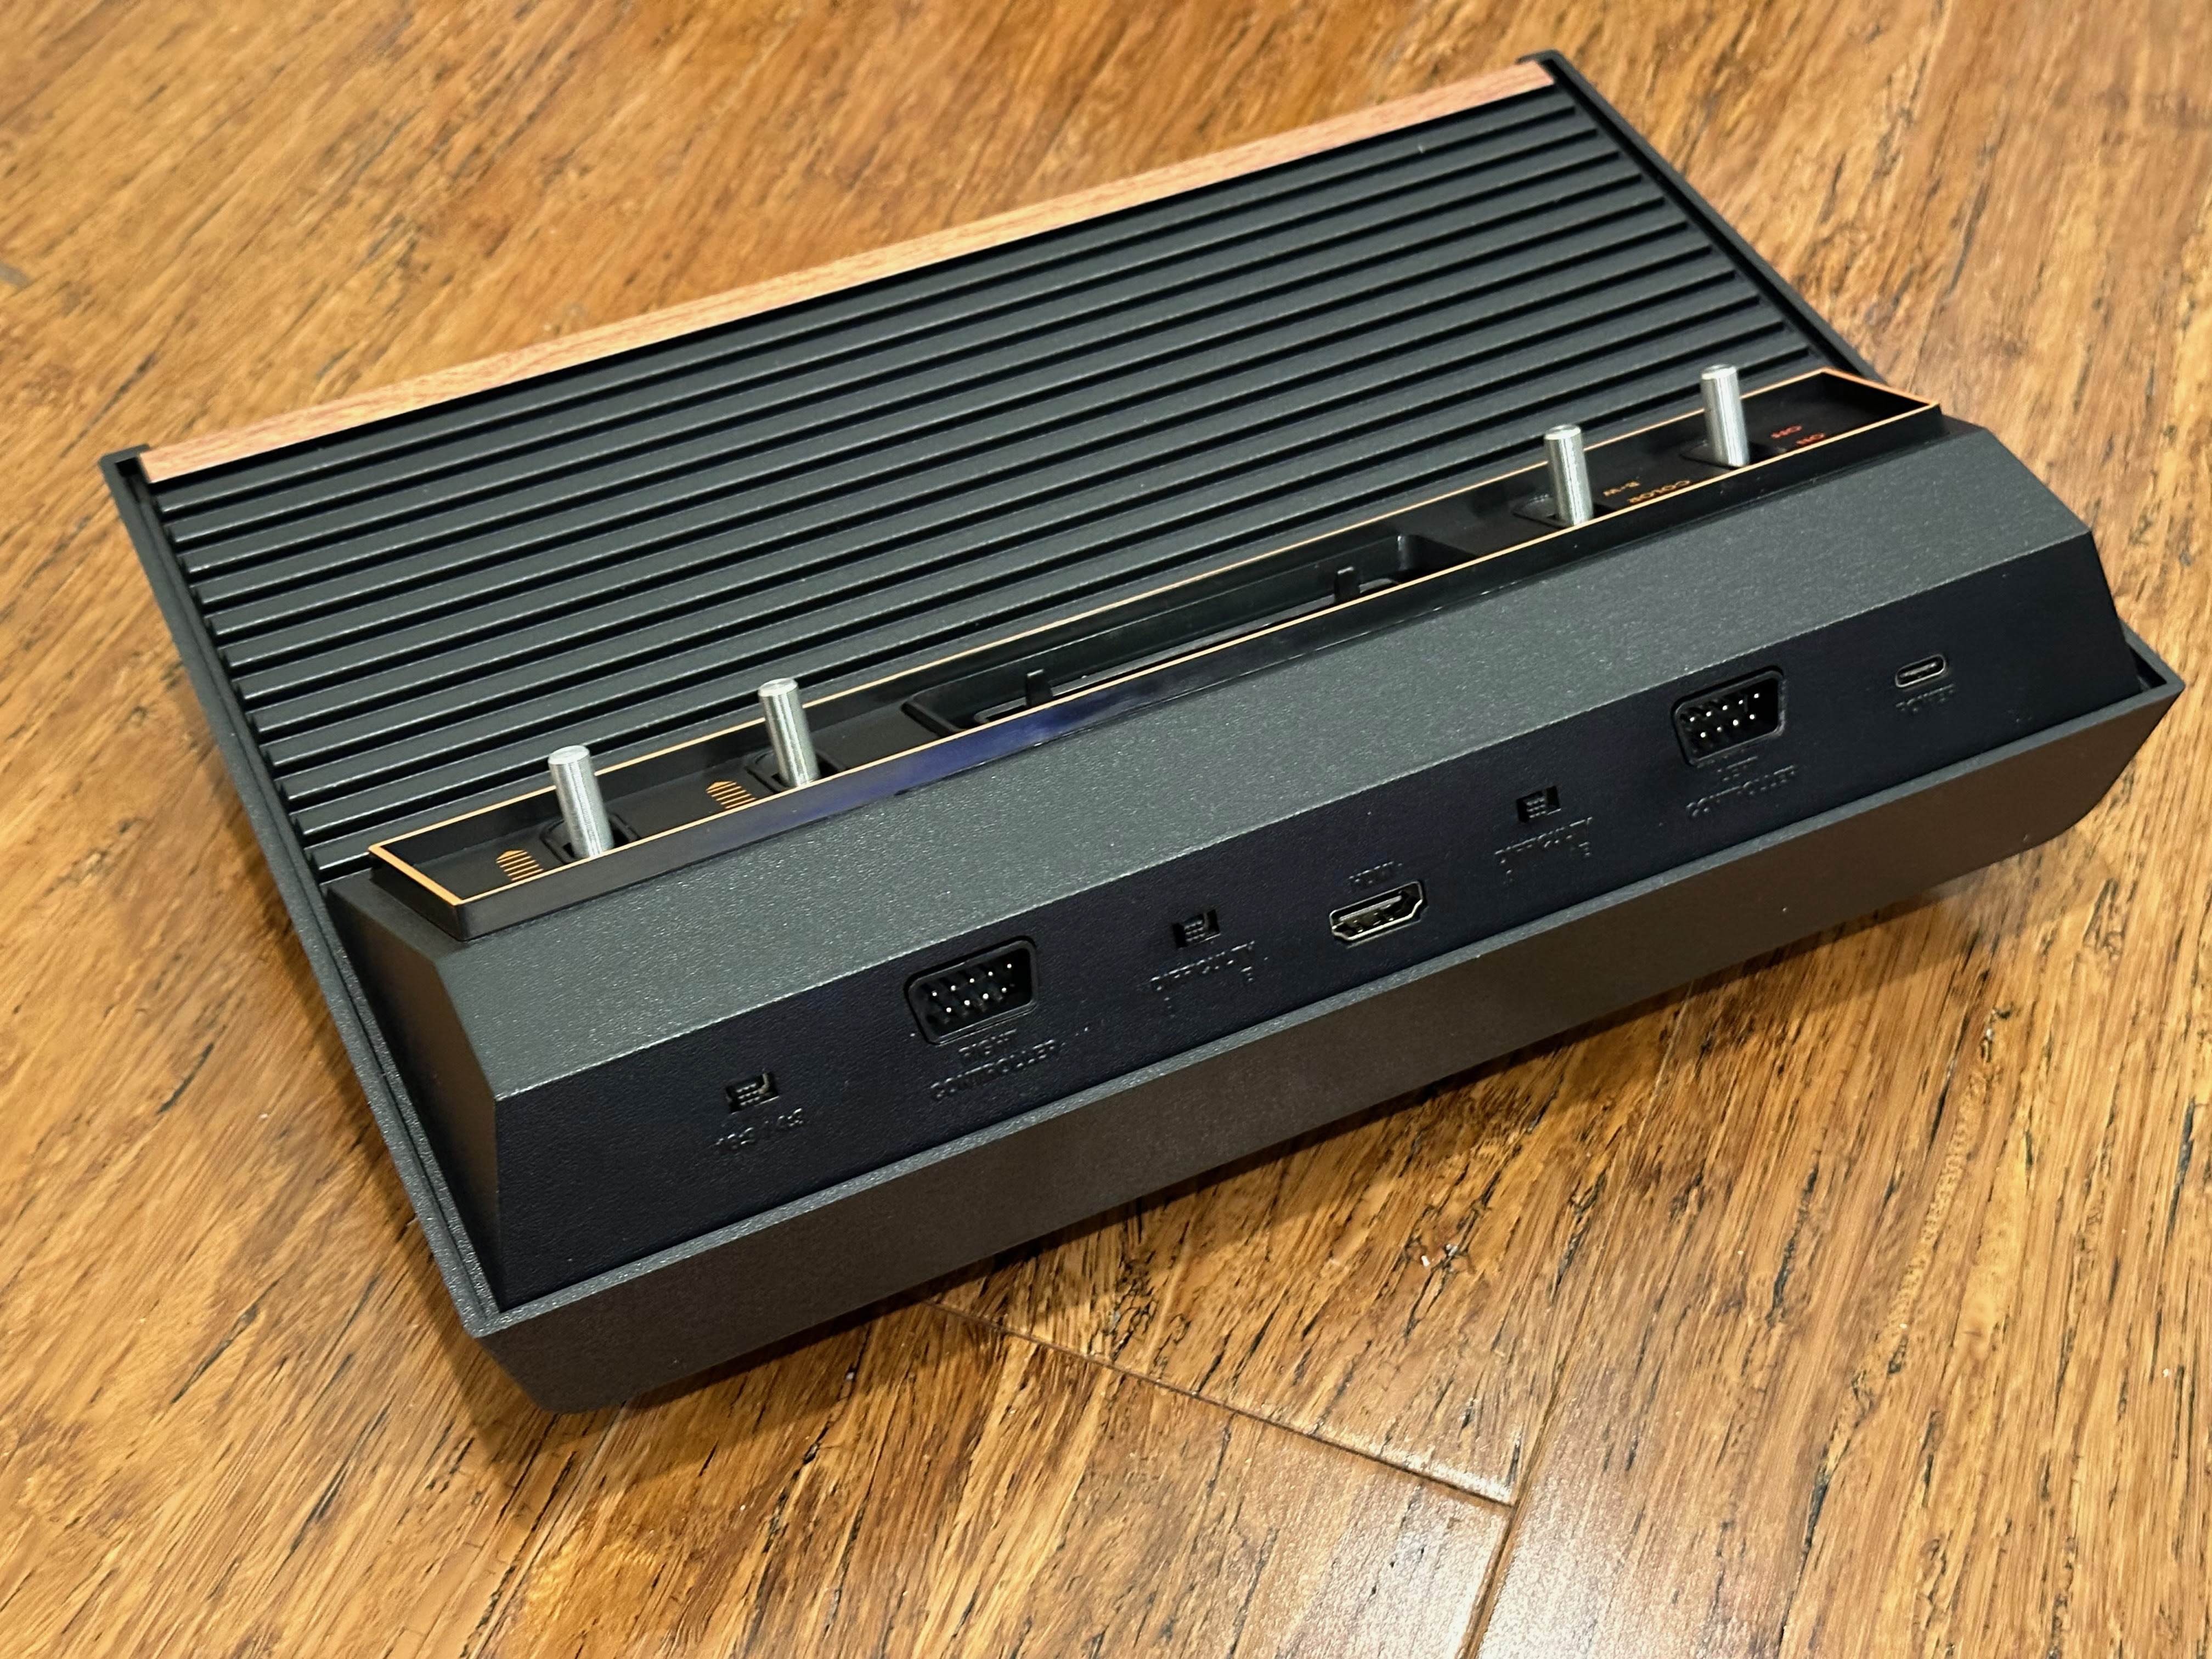  4 in 1 Game Cartridge with Paddle Pack Atari 2600+